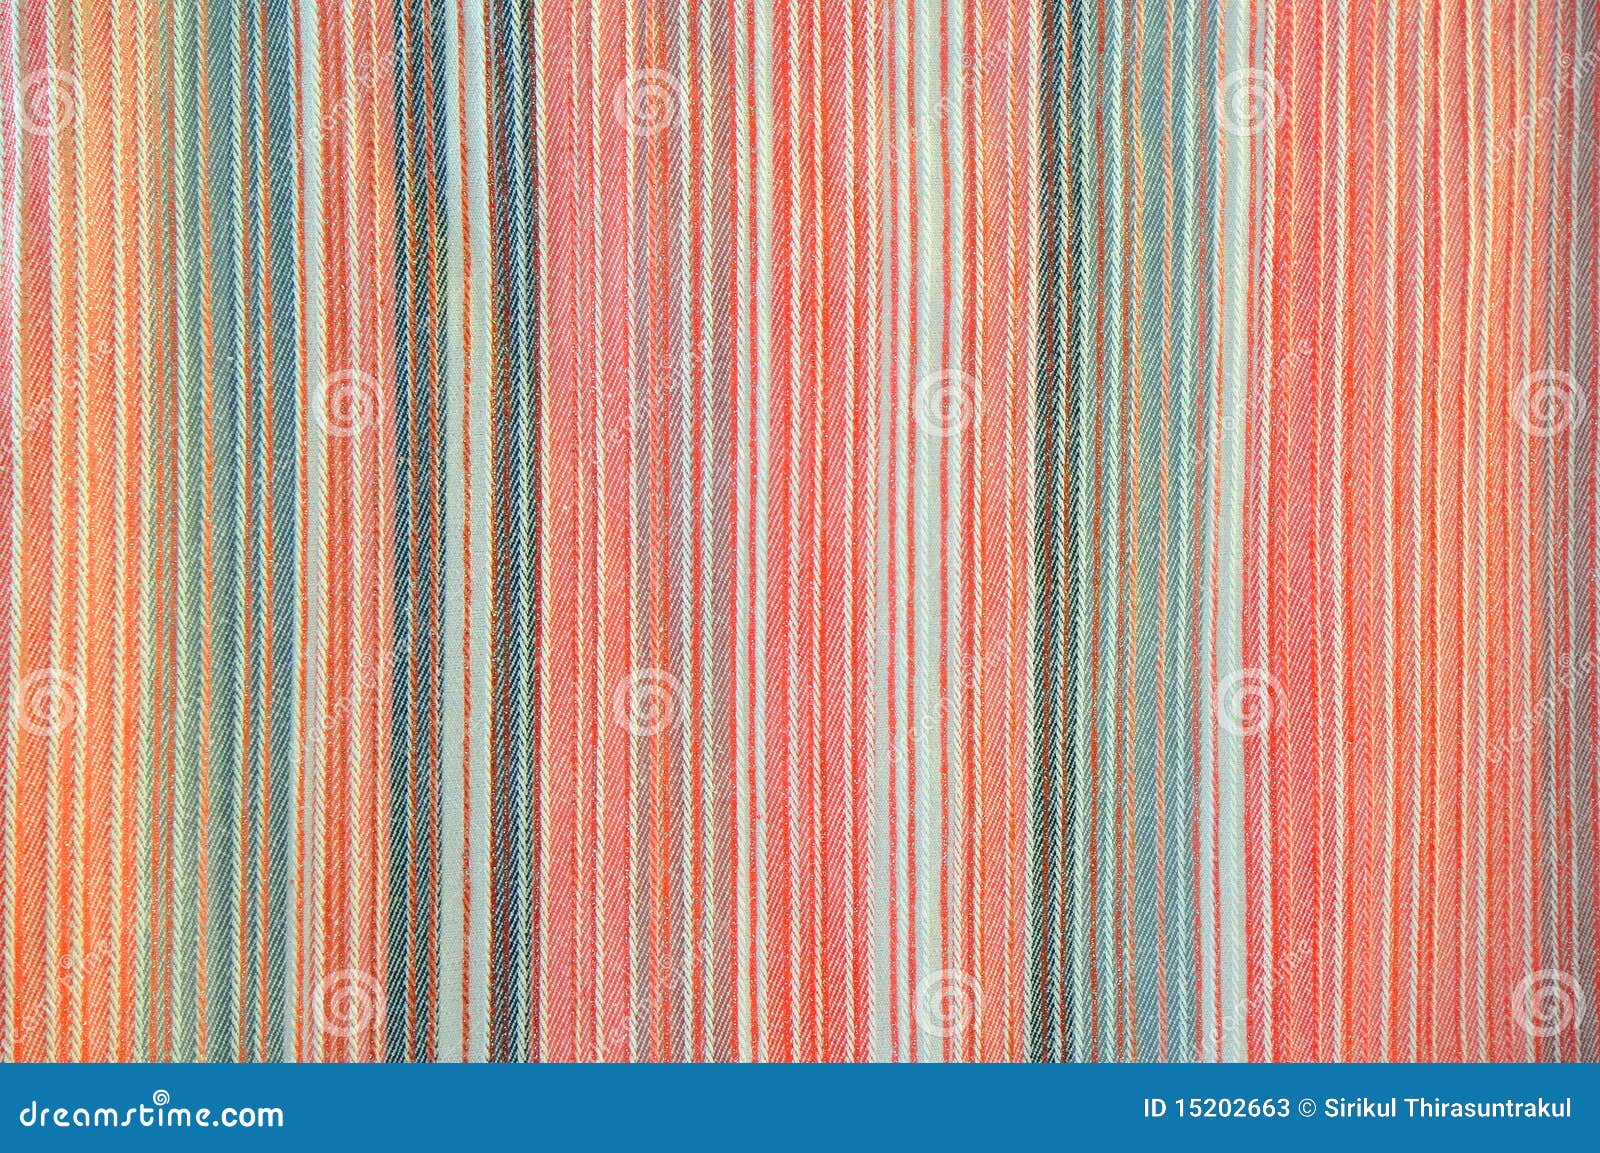 stripe fabric pattern